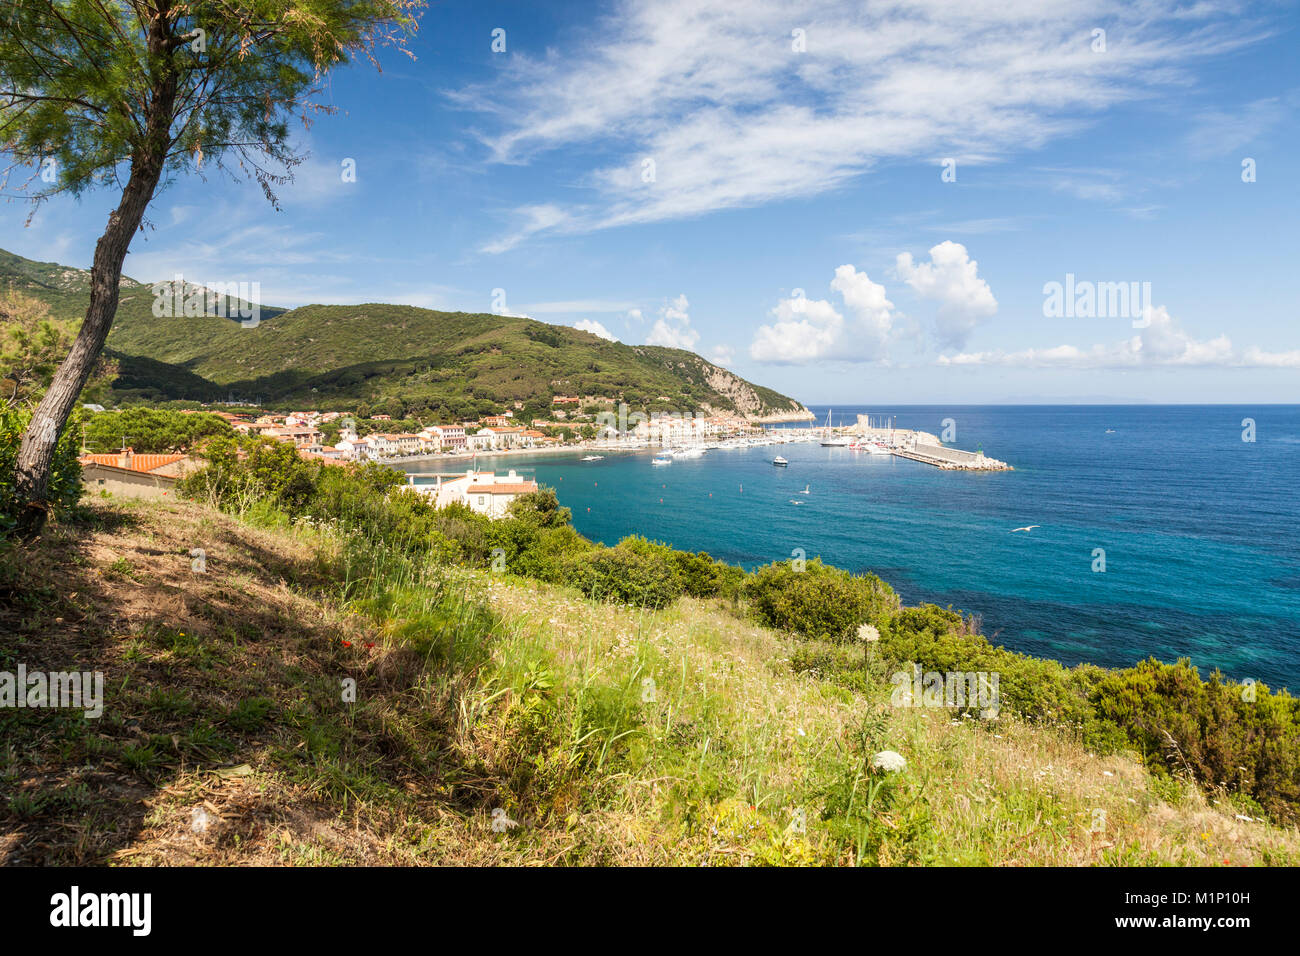 Blick auf den Hafen und das türkisfarbene Meer, Marciana Marina, Insel Elba, Livorno Provinz, Toskana, Italien, Europa Stockfoto